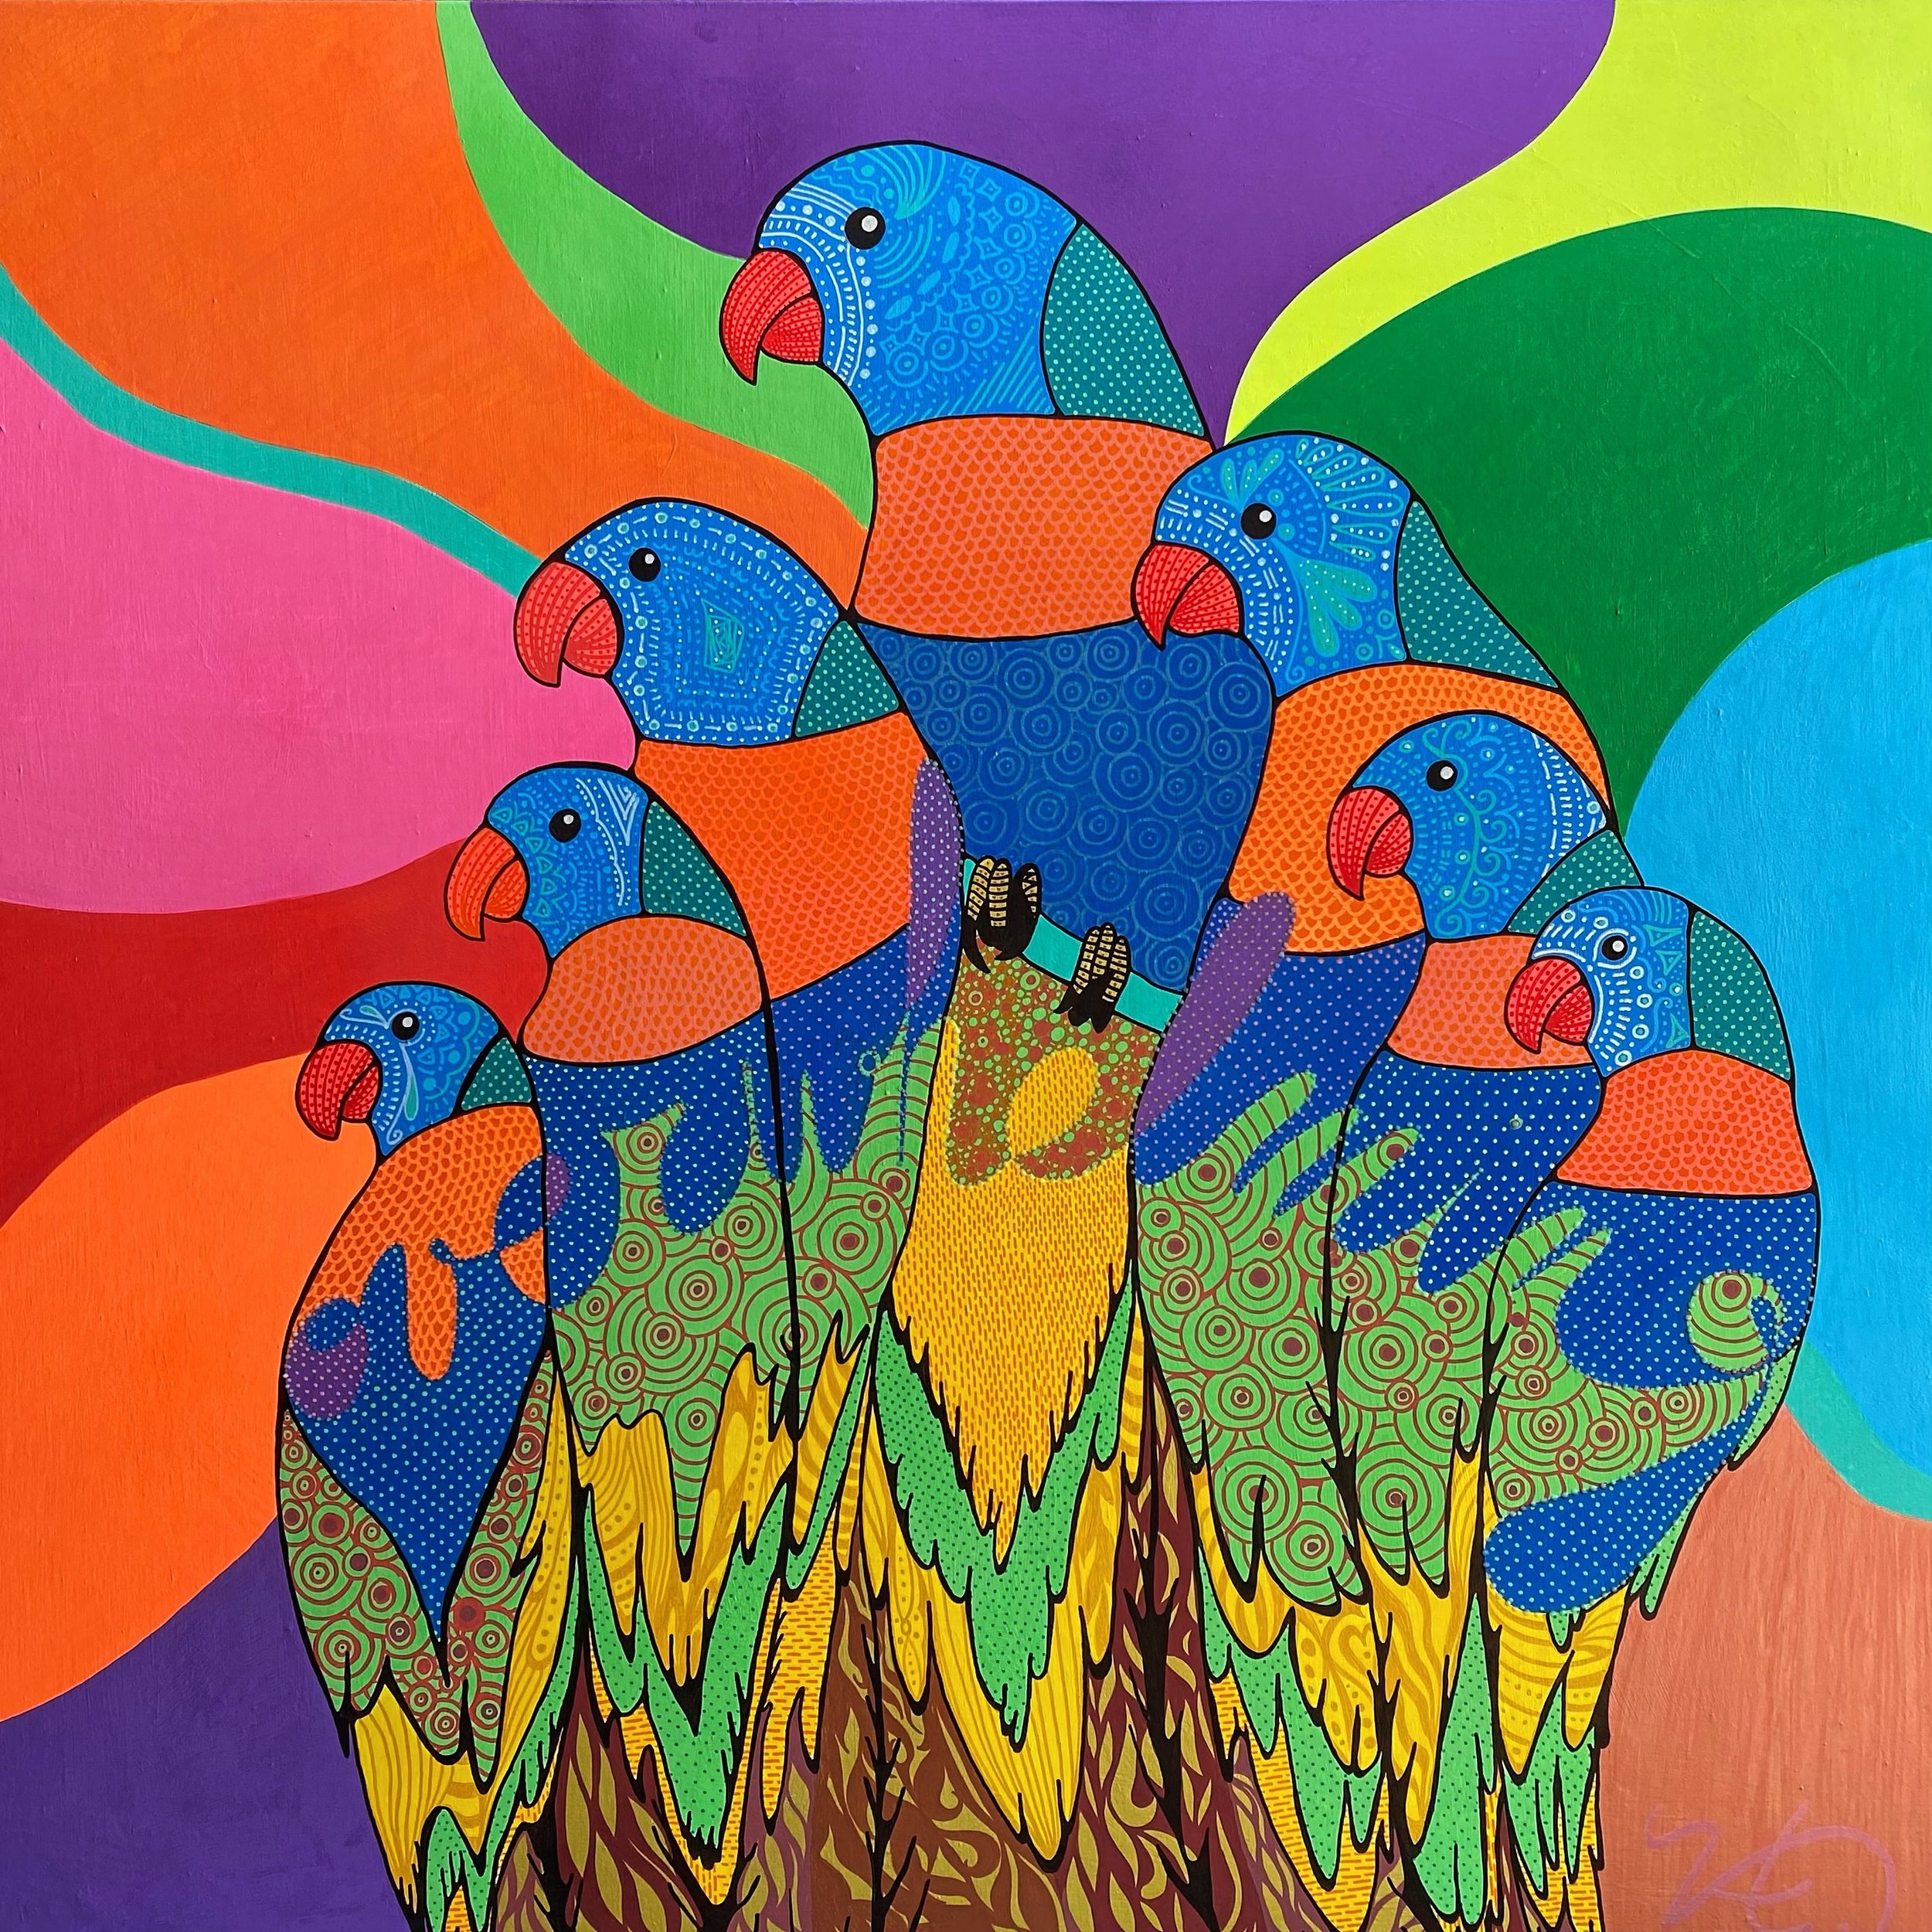 OVERWHELMING - rainbow lorikeets 
48&rdquo;x48&rdquo; acrylic on canvas
.
.
.
.
.
.
.
.
.
.
#australianart #australianartist #birdart #australianbirds #visualartist #localartist #byronbayartist #acrylicpainting